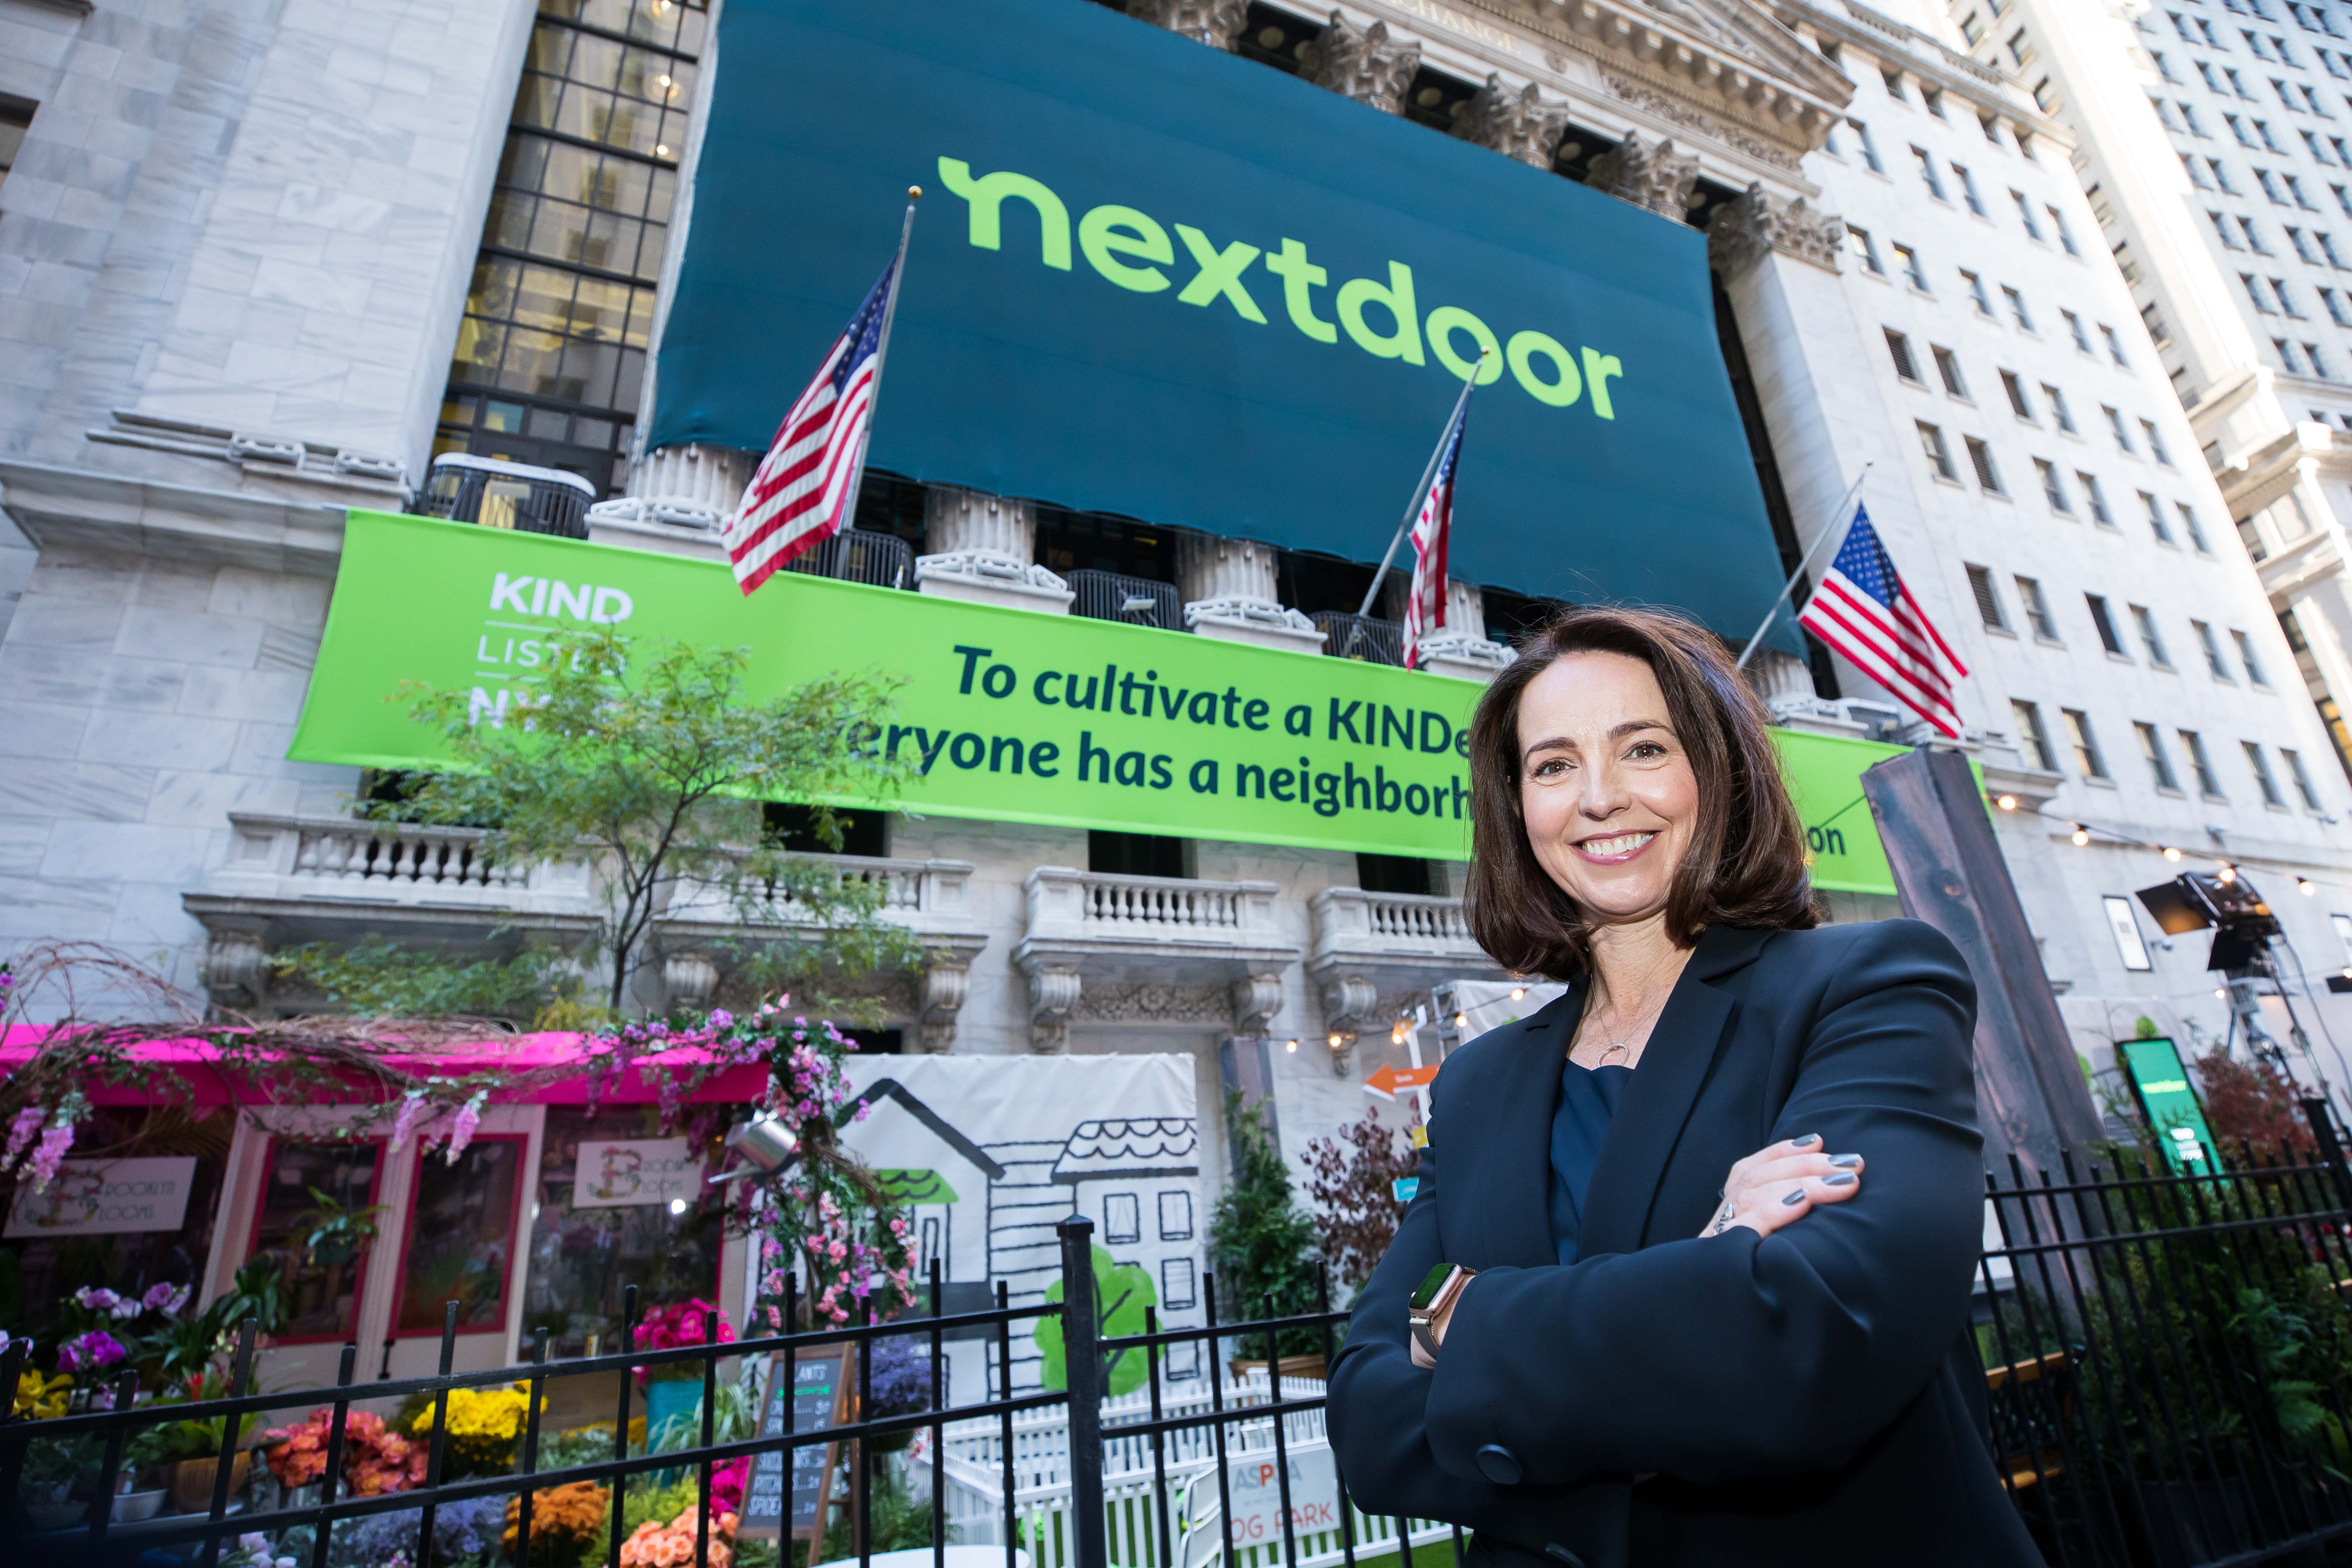 Nextdoor's listing day "neighborhood" just behind CEO Sarah Friar